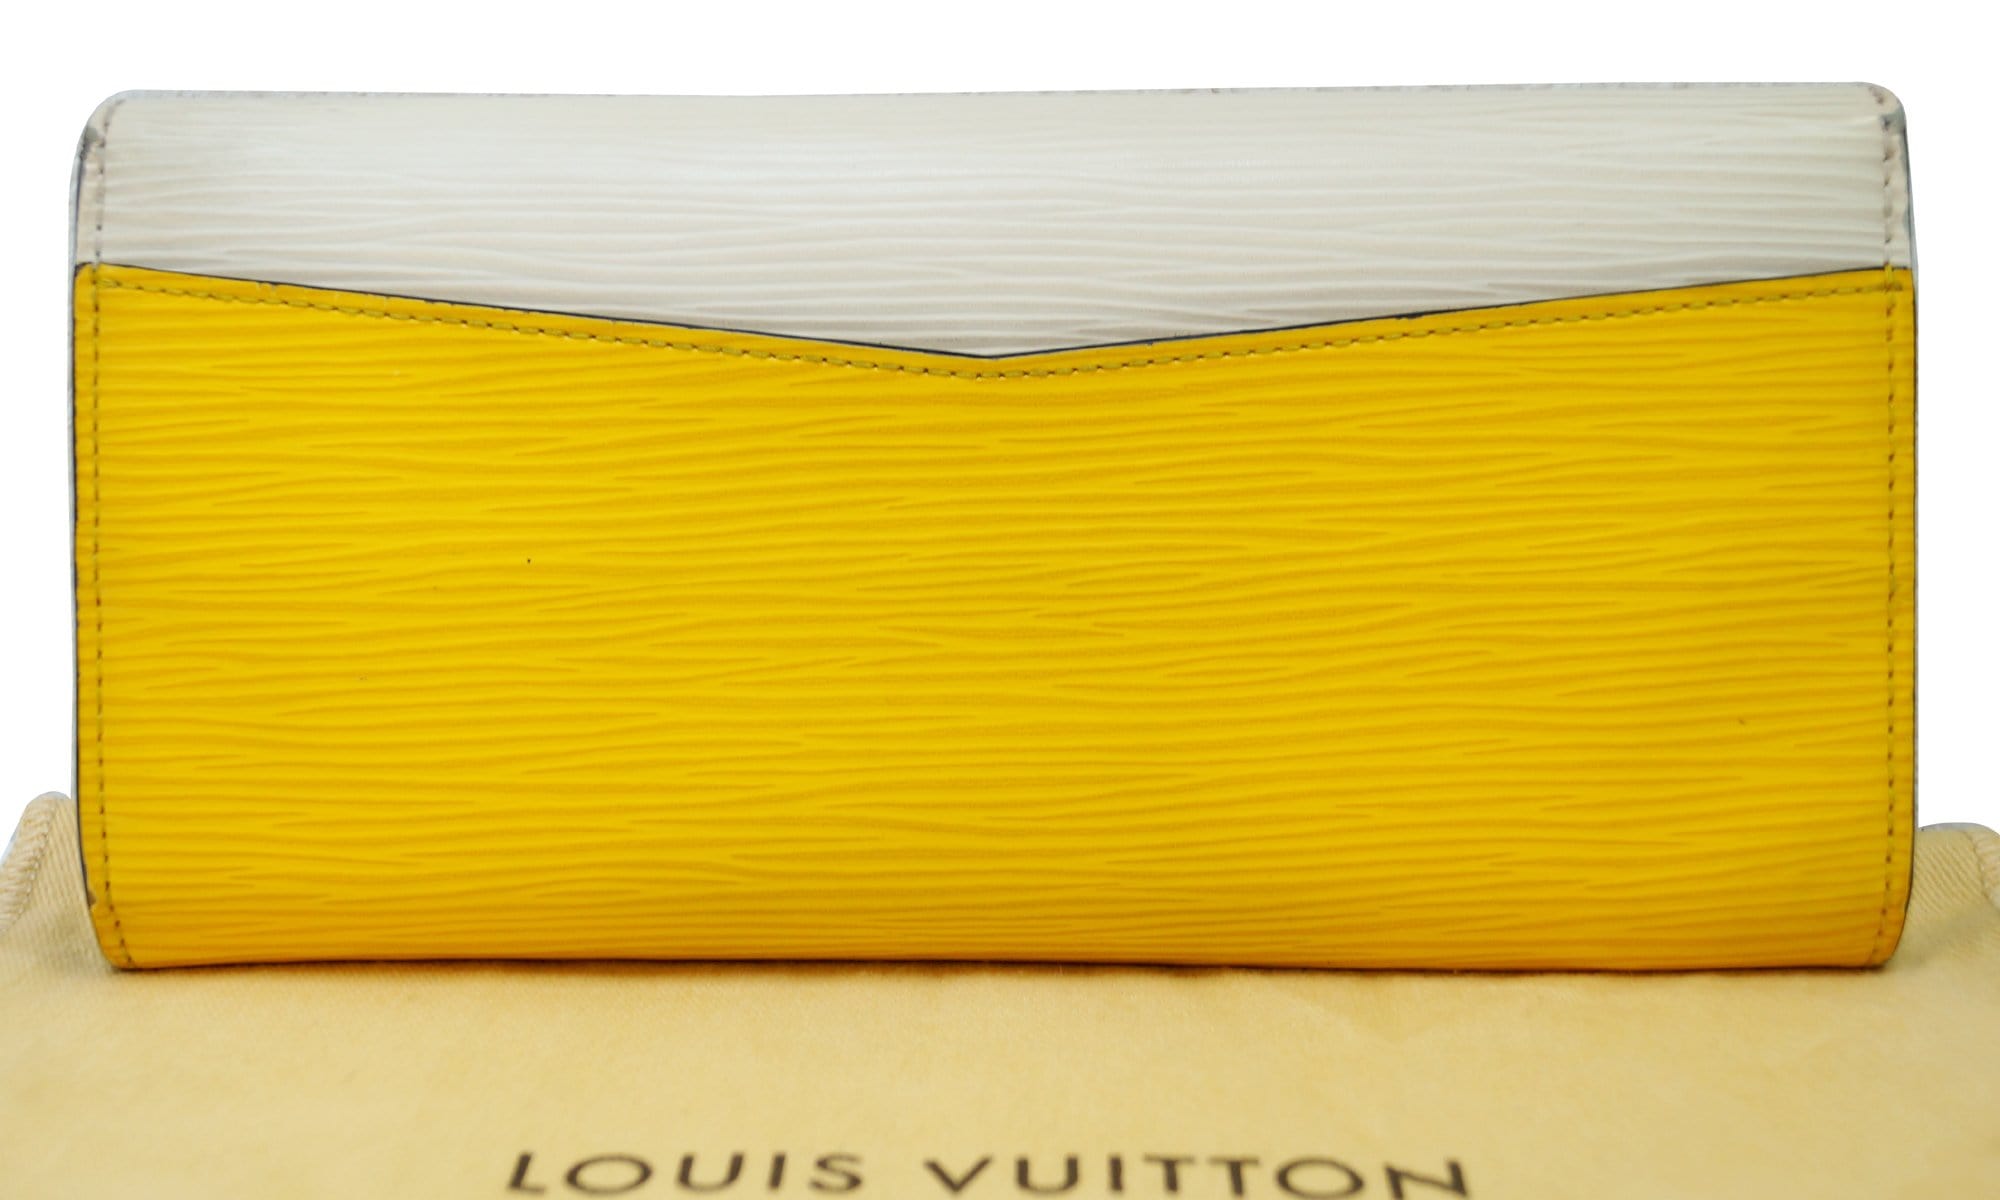 Louis Vuitton Portefeuille Viennois M63249 Yellow Wallet 11502